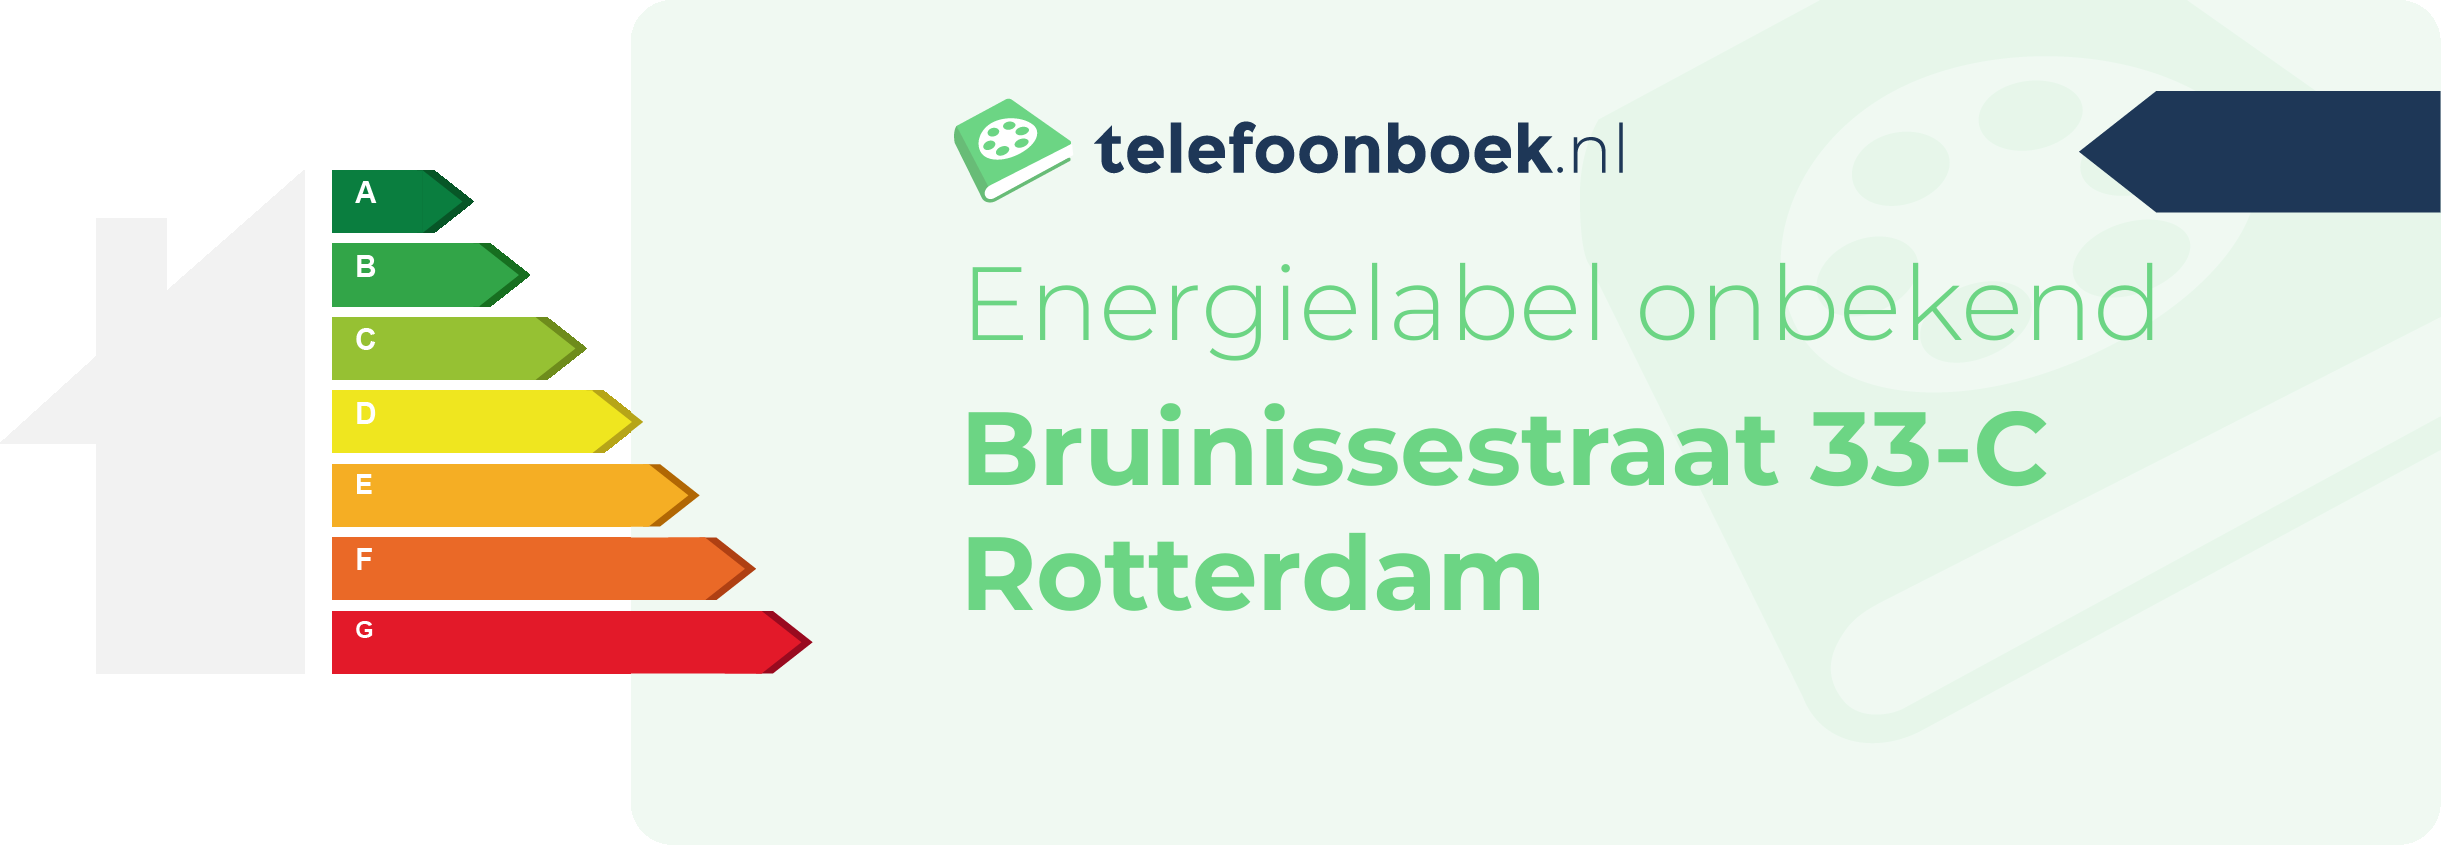 Energielabel Bruinissestraat 33-C Rotterdam